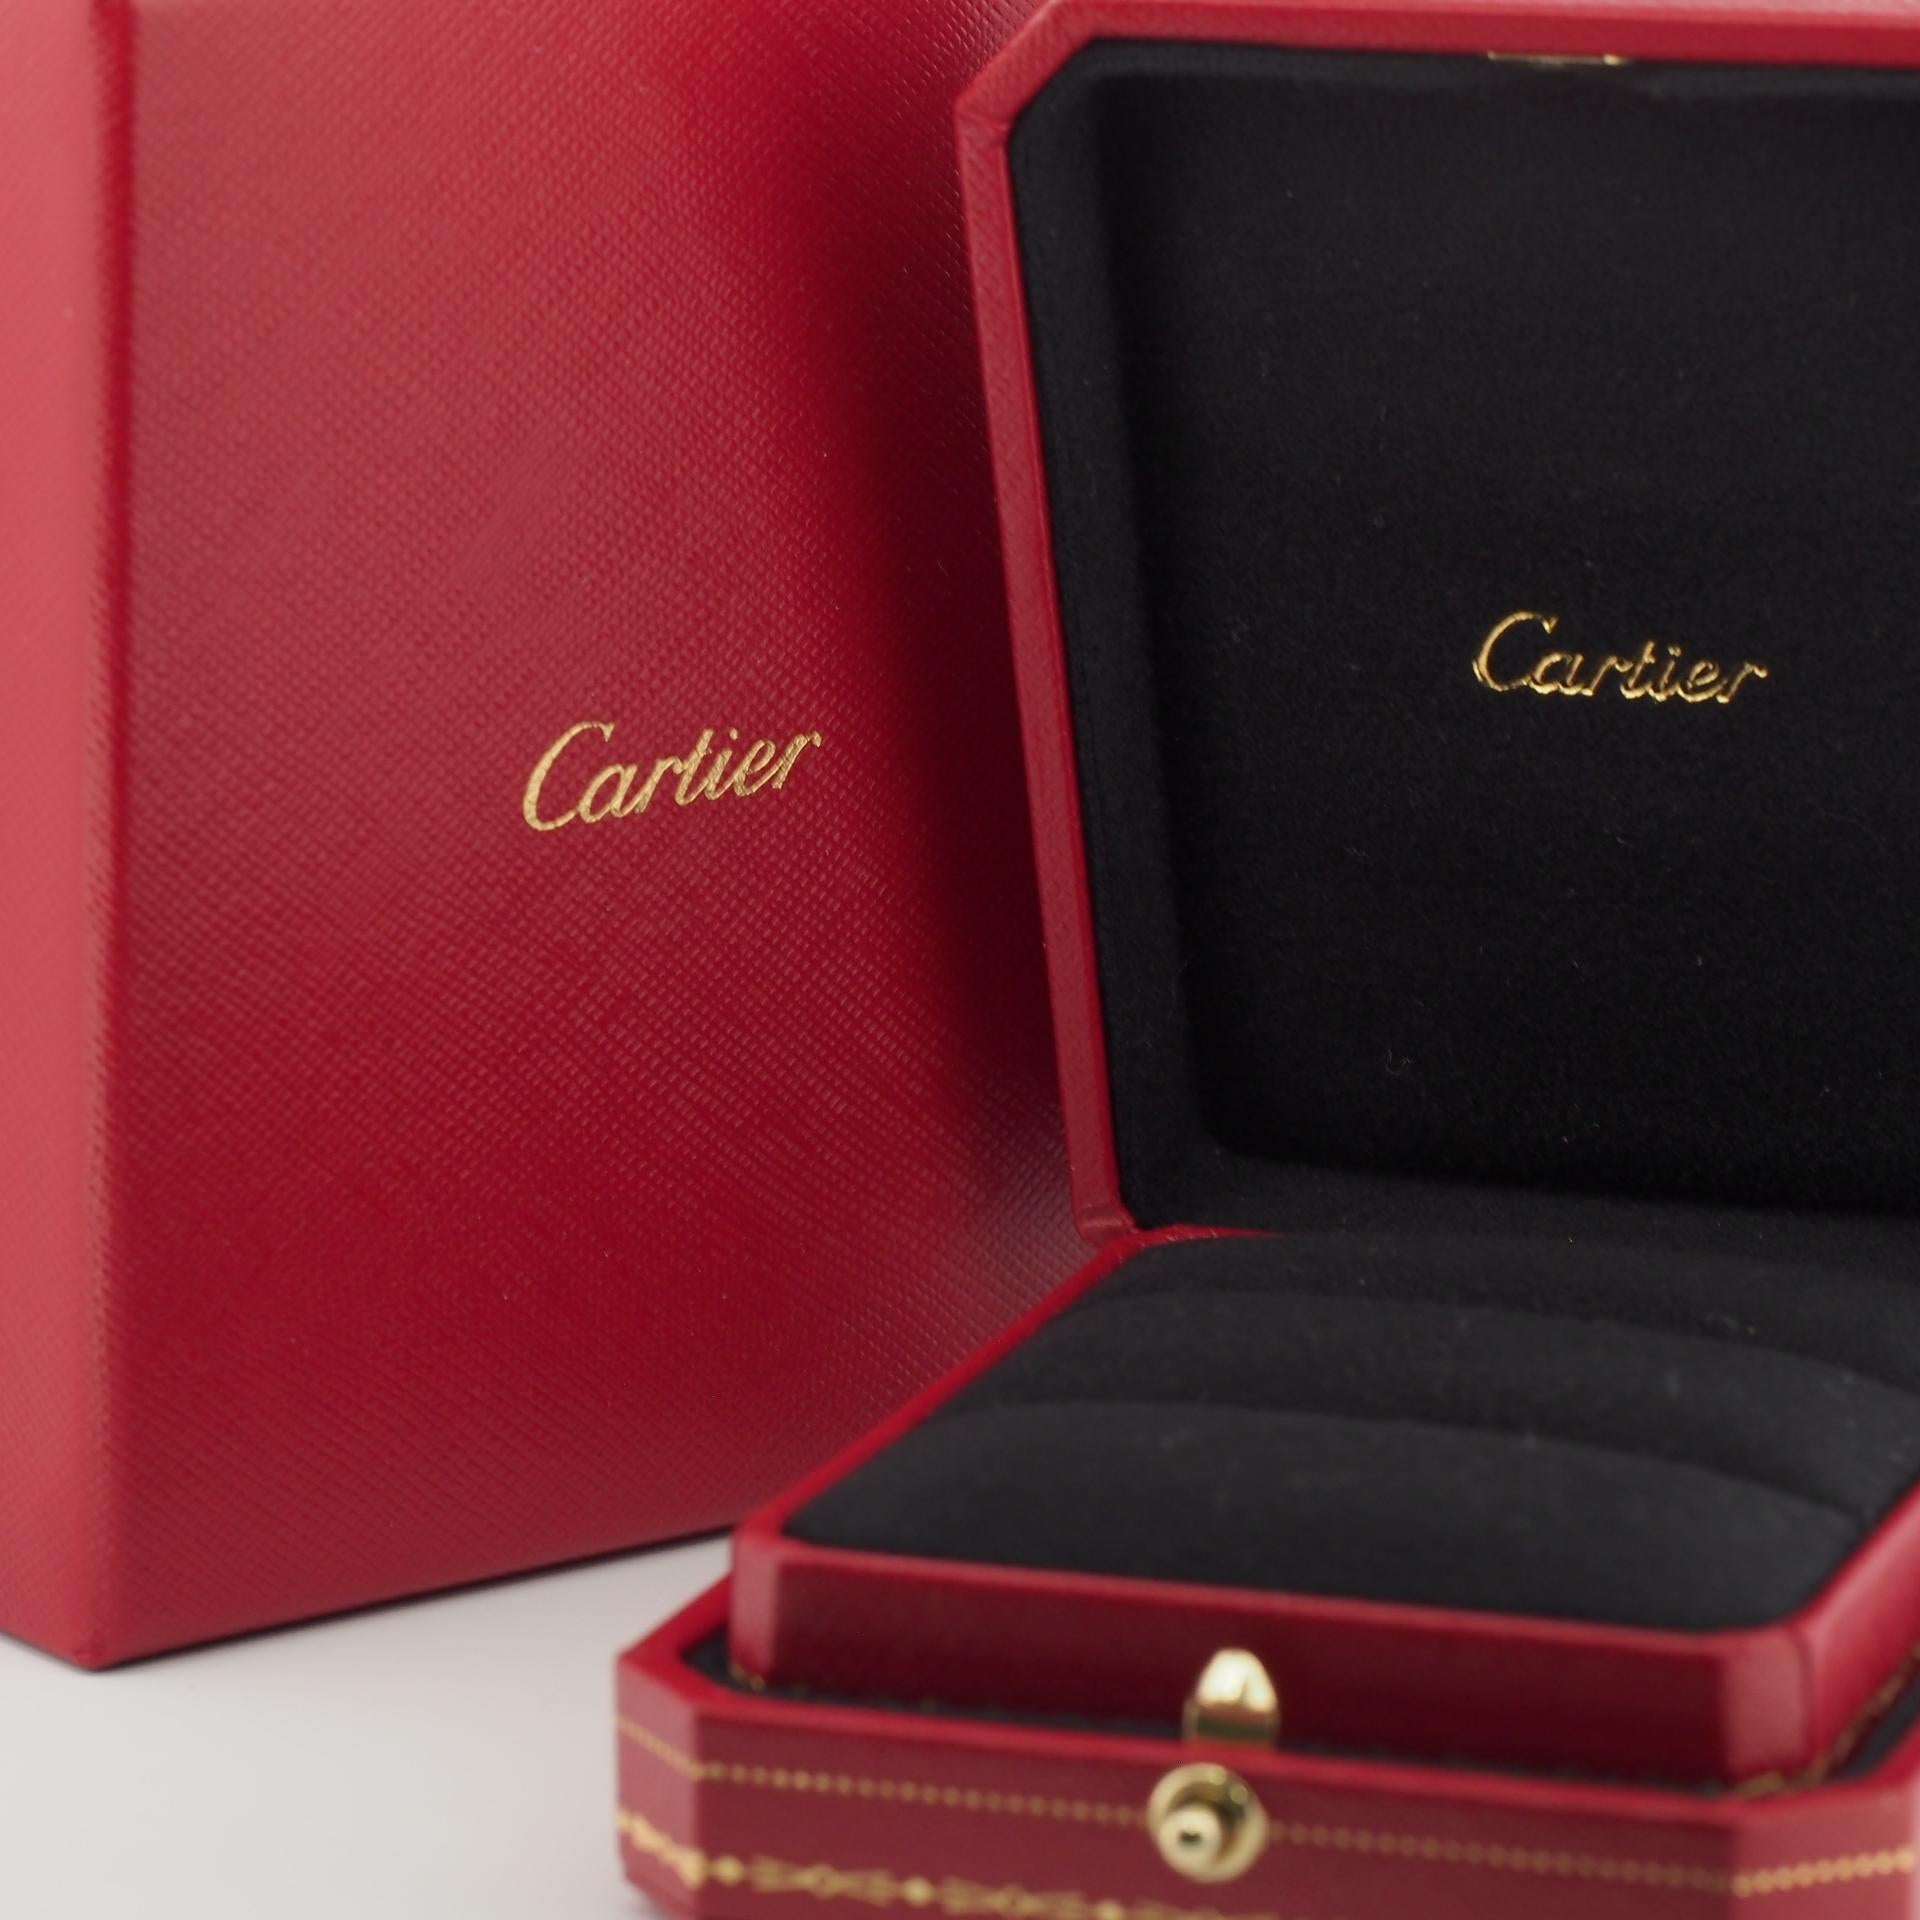 Cartier 1895 Wedding Band Diamond Ring 52 PG US 6.0 4